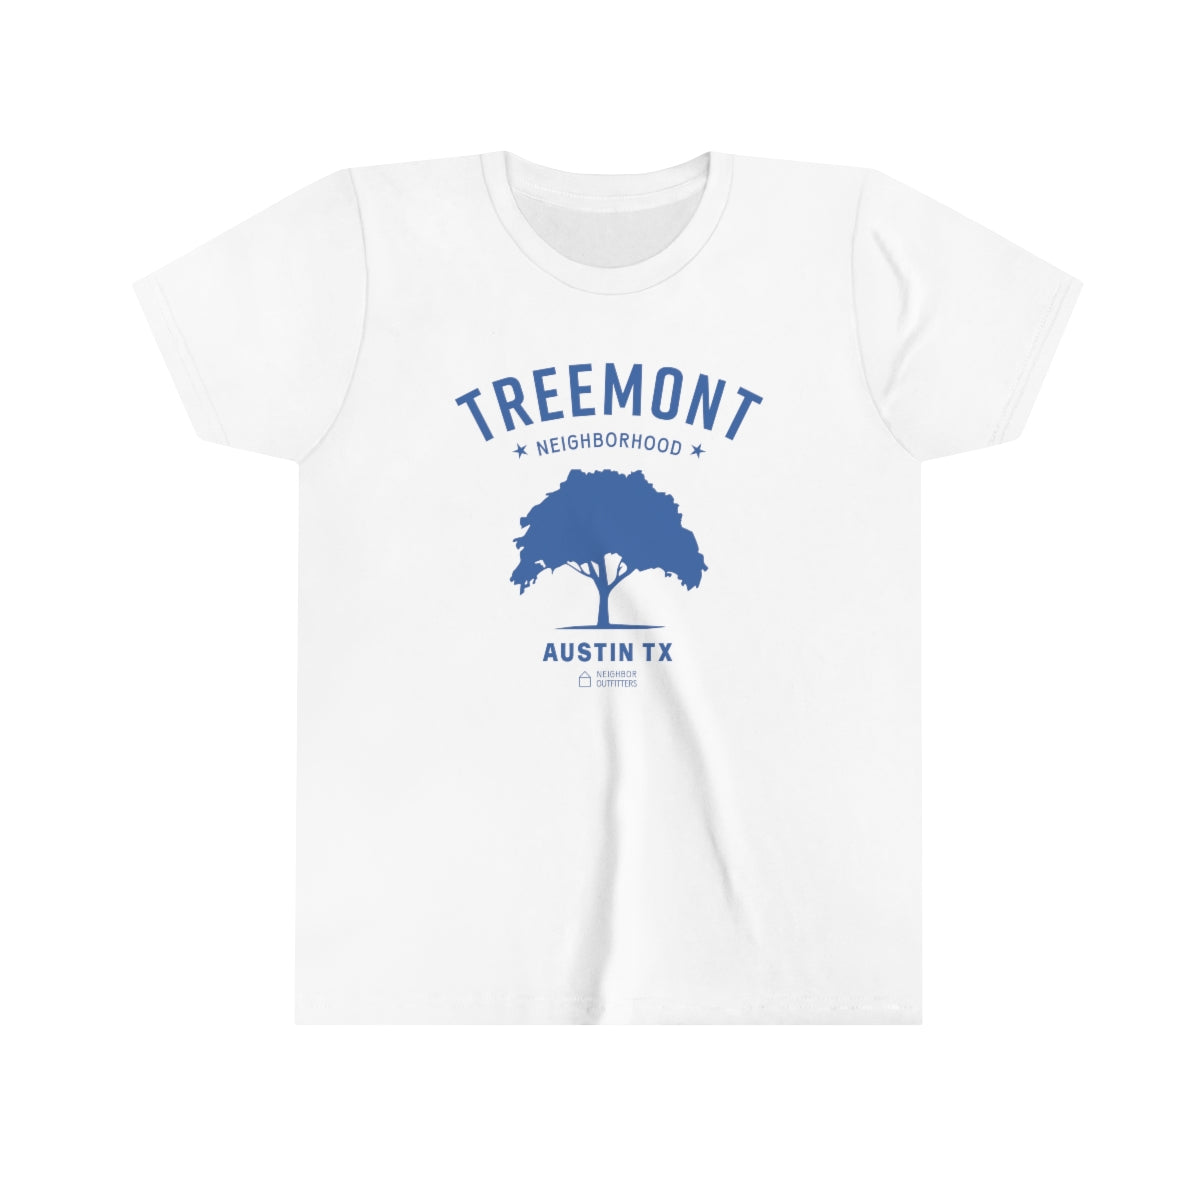 Kids Treemont T-Shirt: "Live Oak"